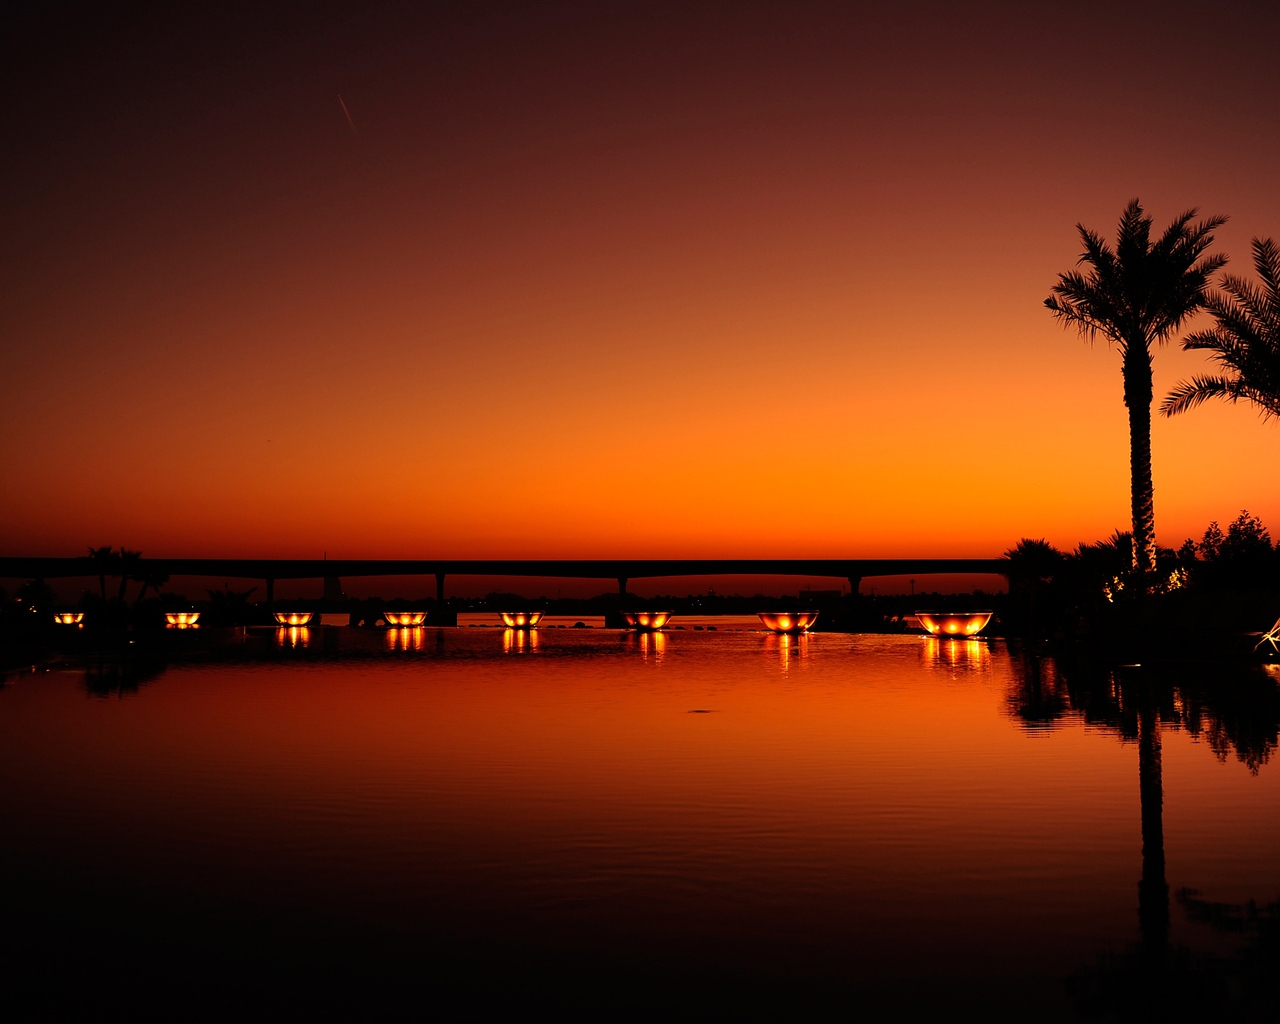 Sunset in Dubai for 1280 x 1024 resolution